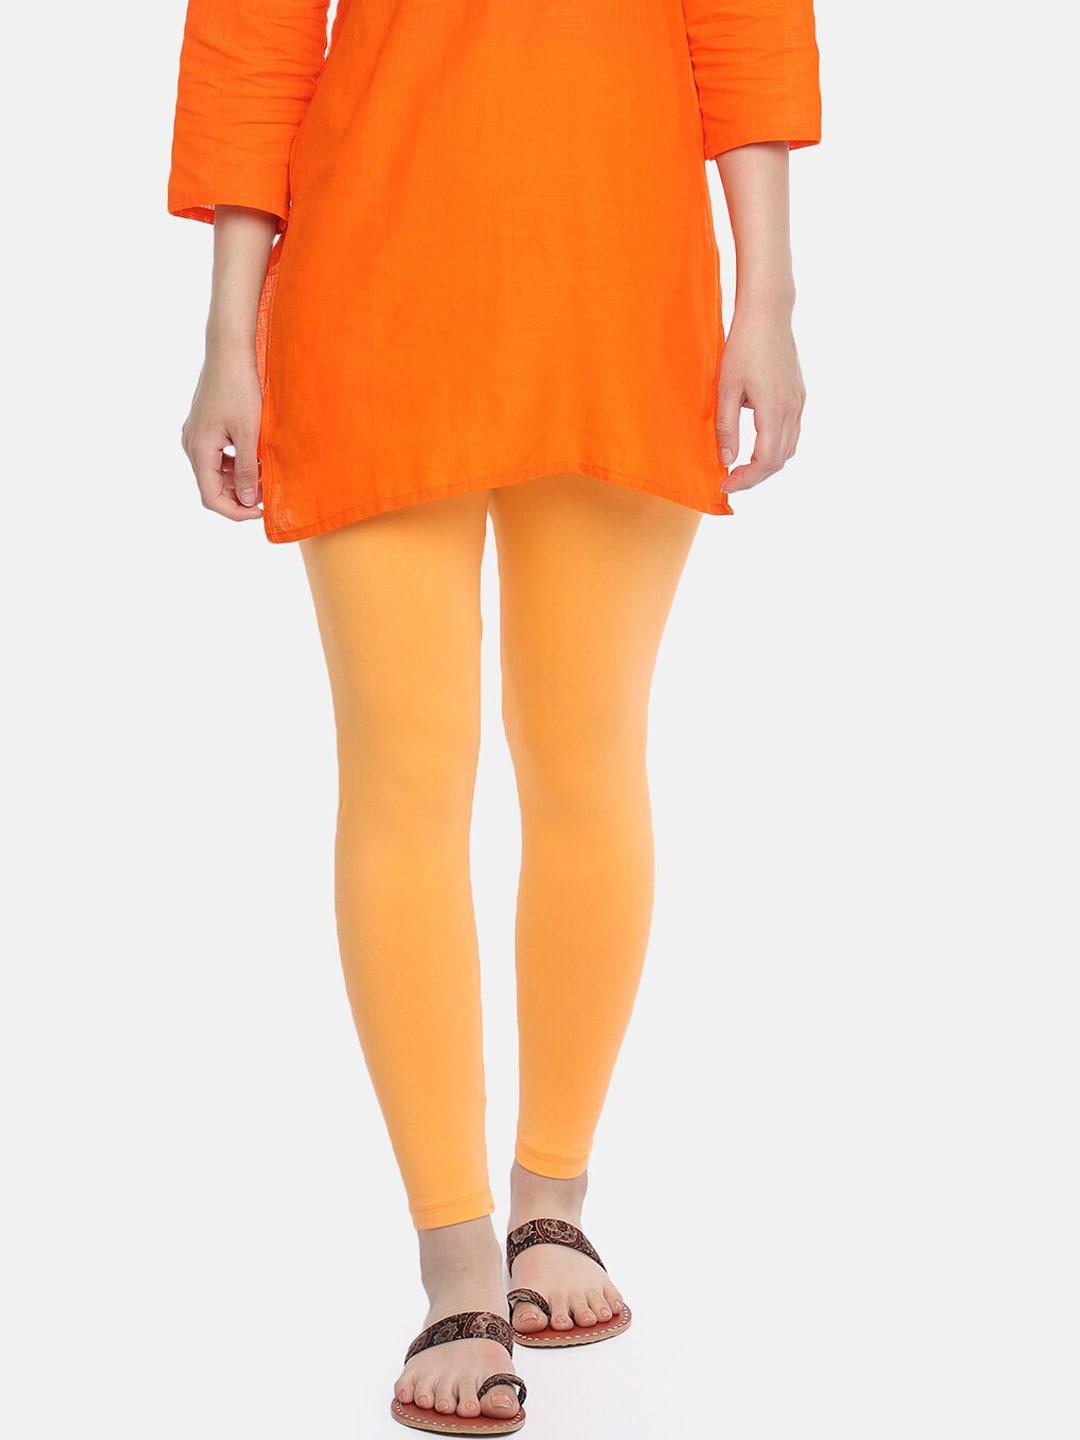 dollar missy women orange solid ankle-length leggings